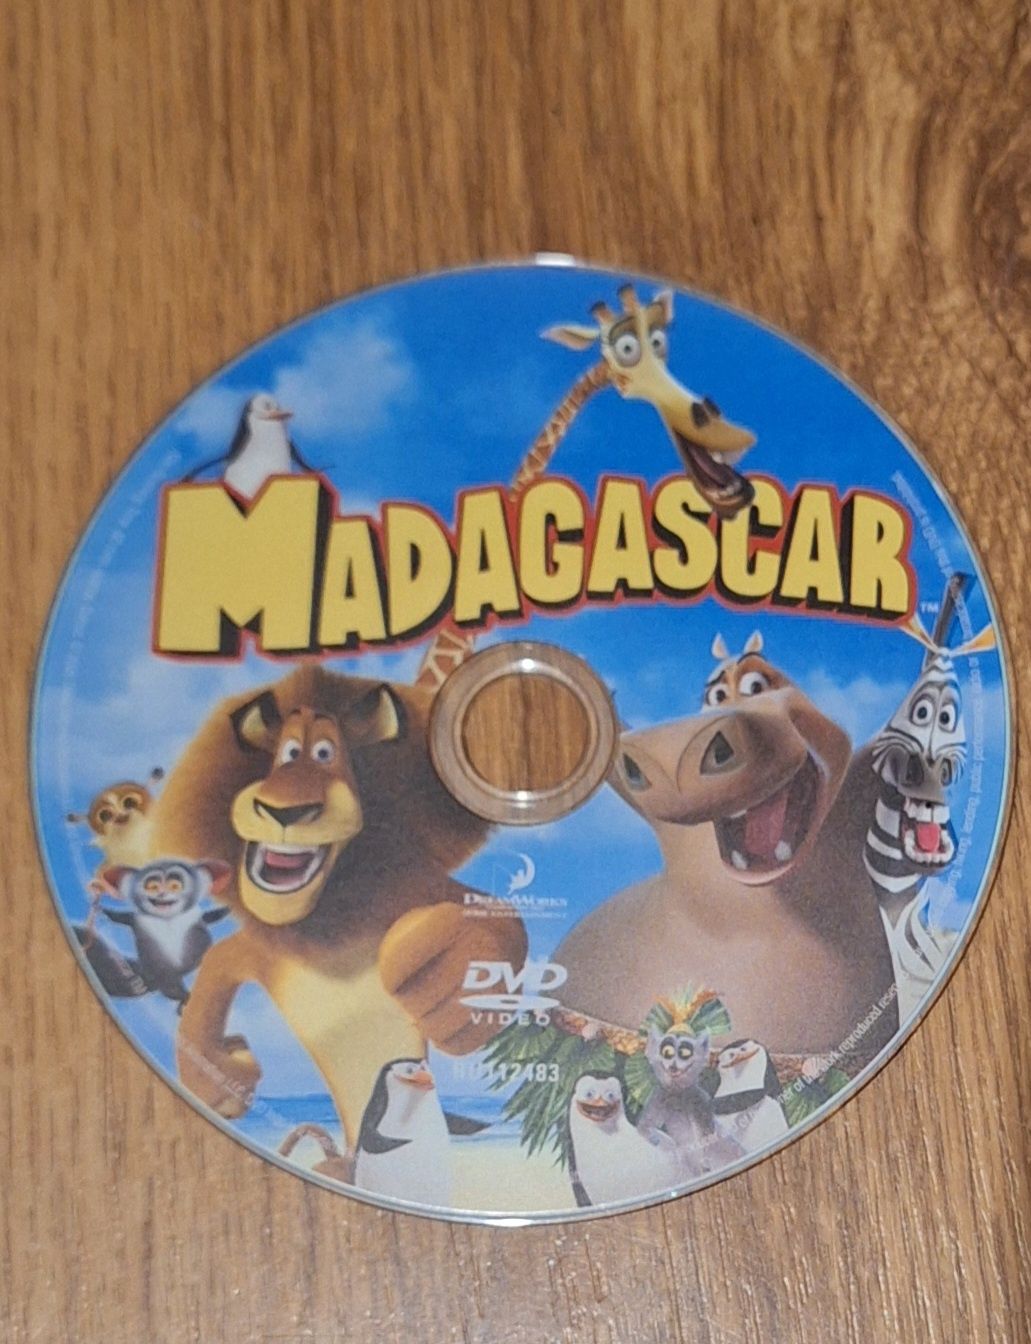 Madagaskar 2005 - DVD